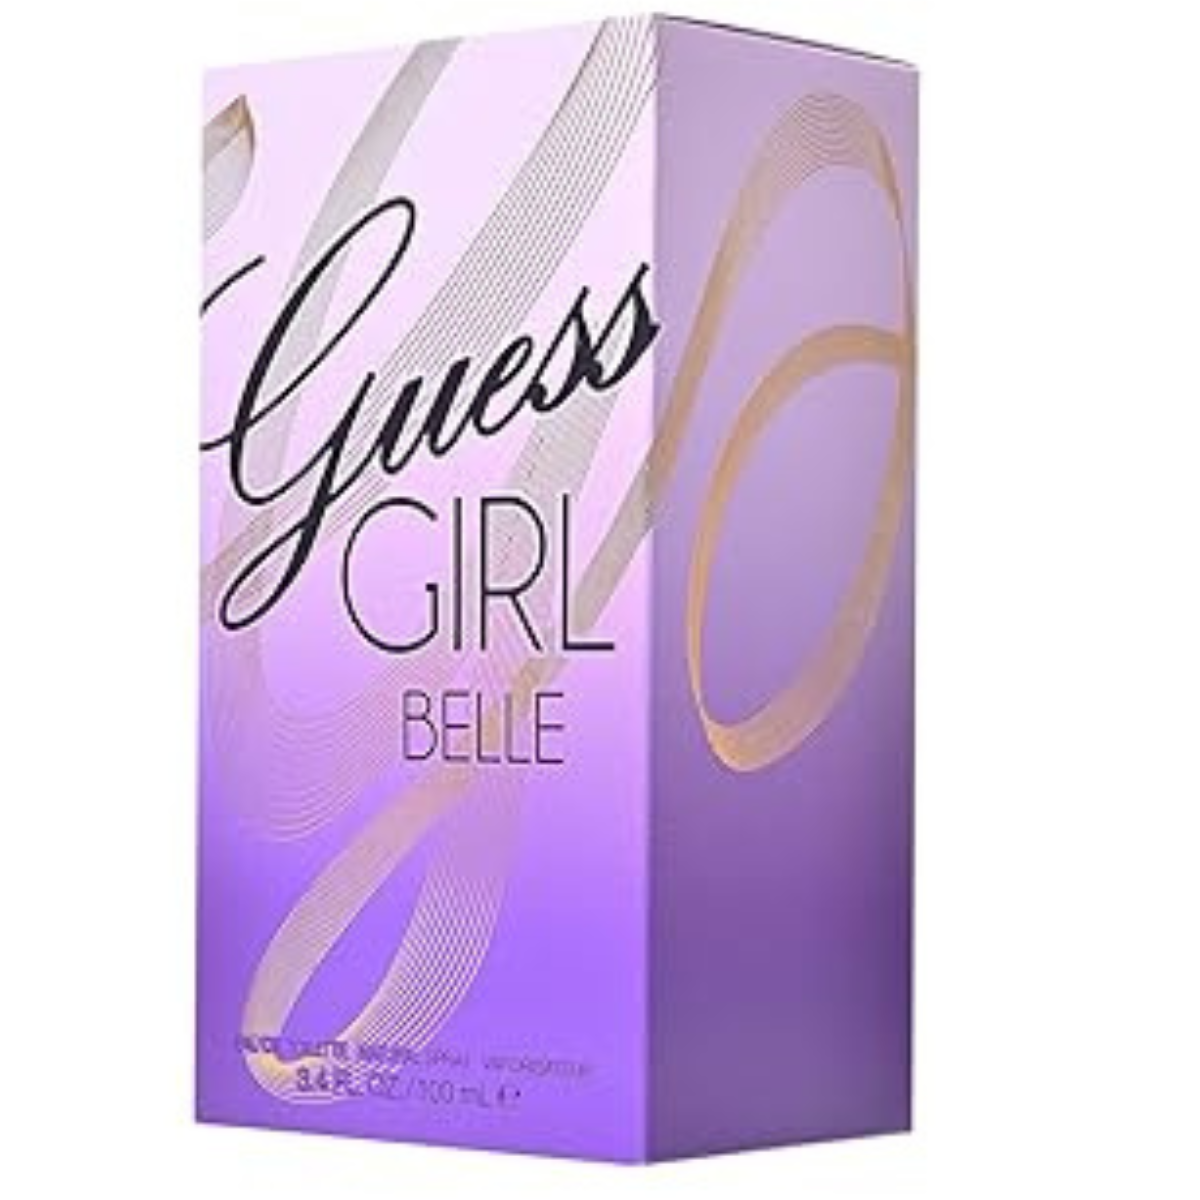 Guess Girl Belle 100 Ml For Women Perfume